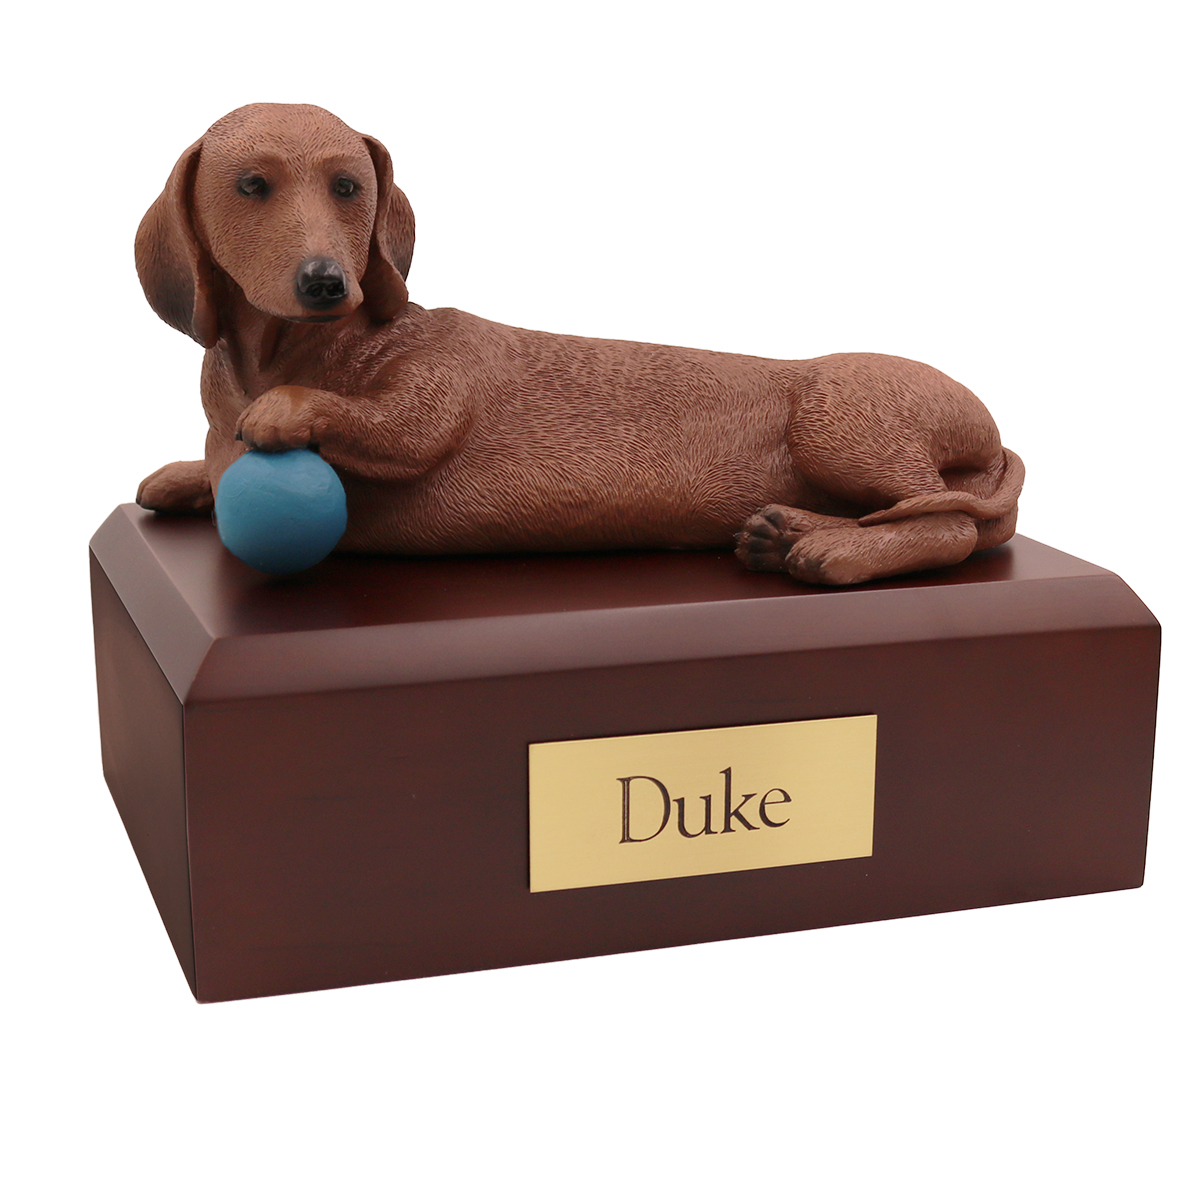 Dog, Dachshund, Red - Figurine Urn